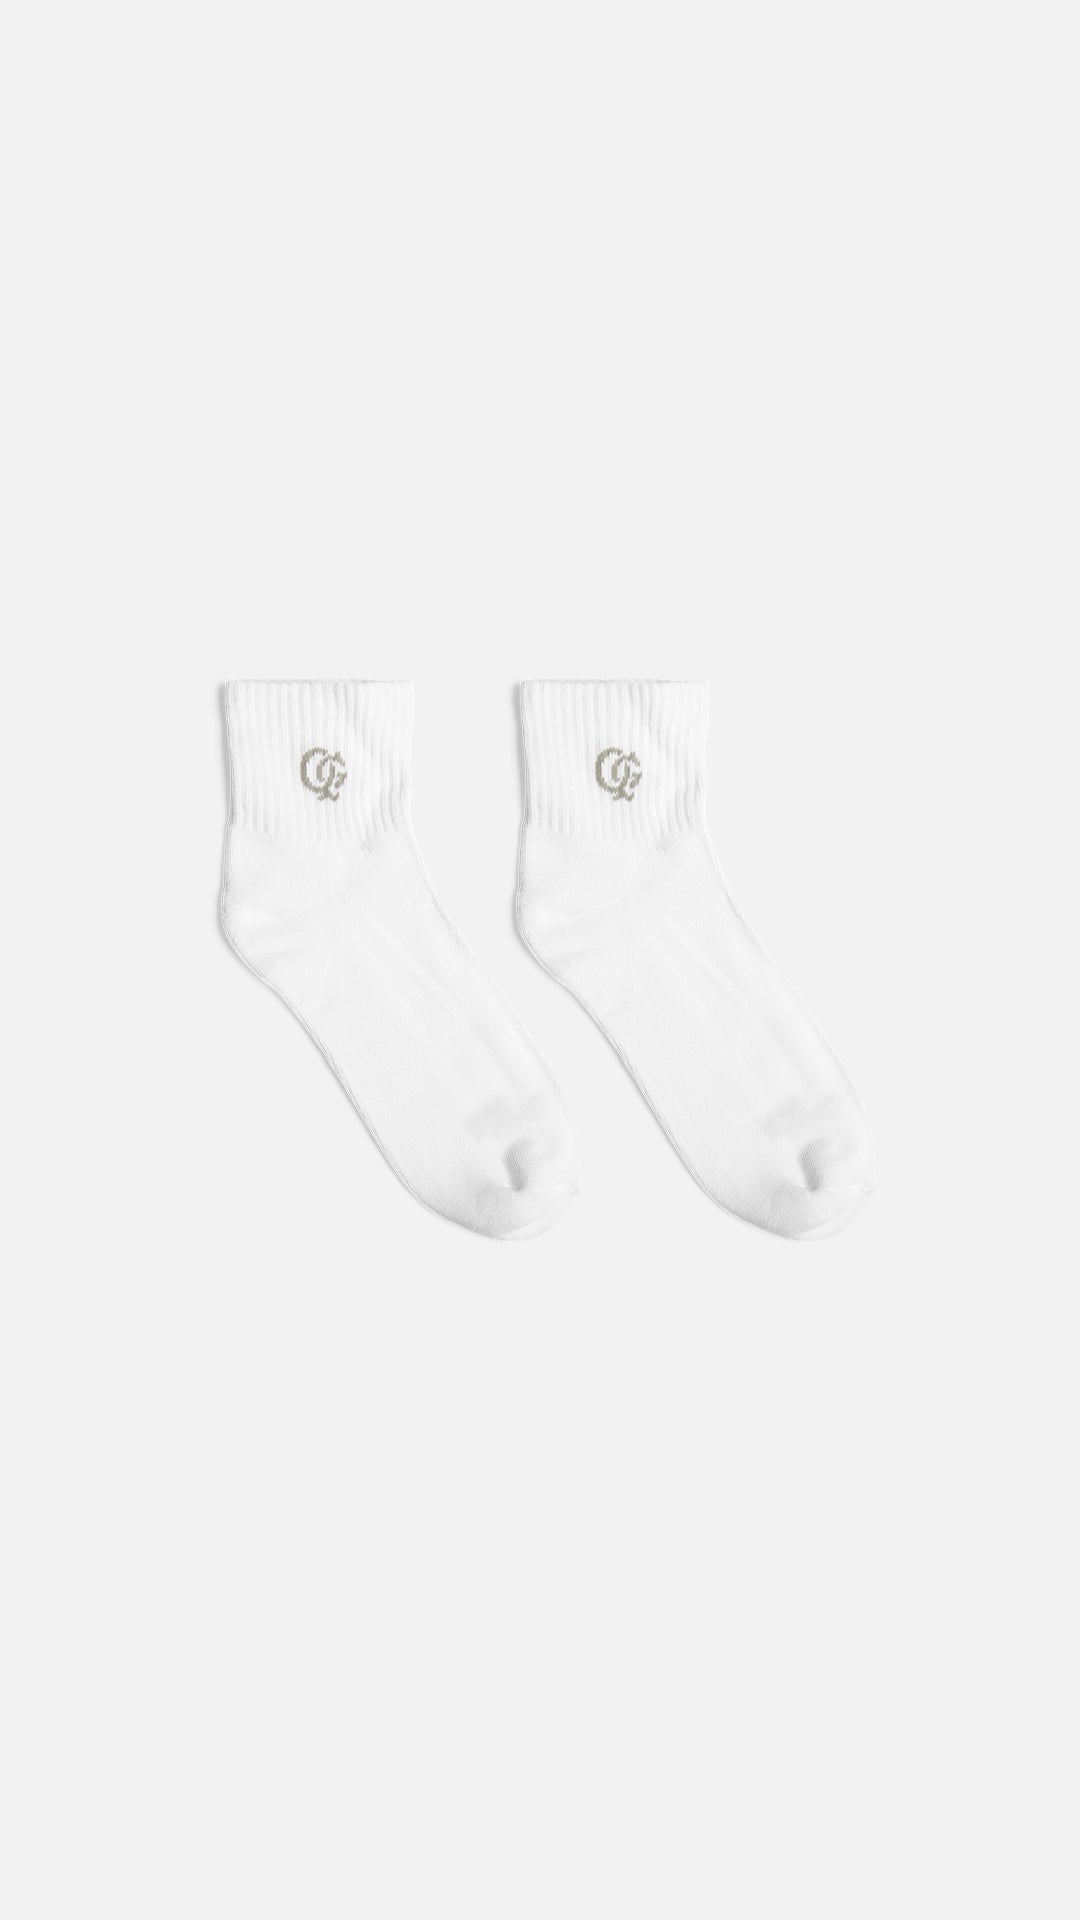 QG Monogram Quarter Socks